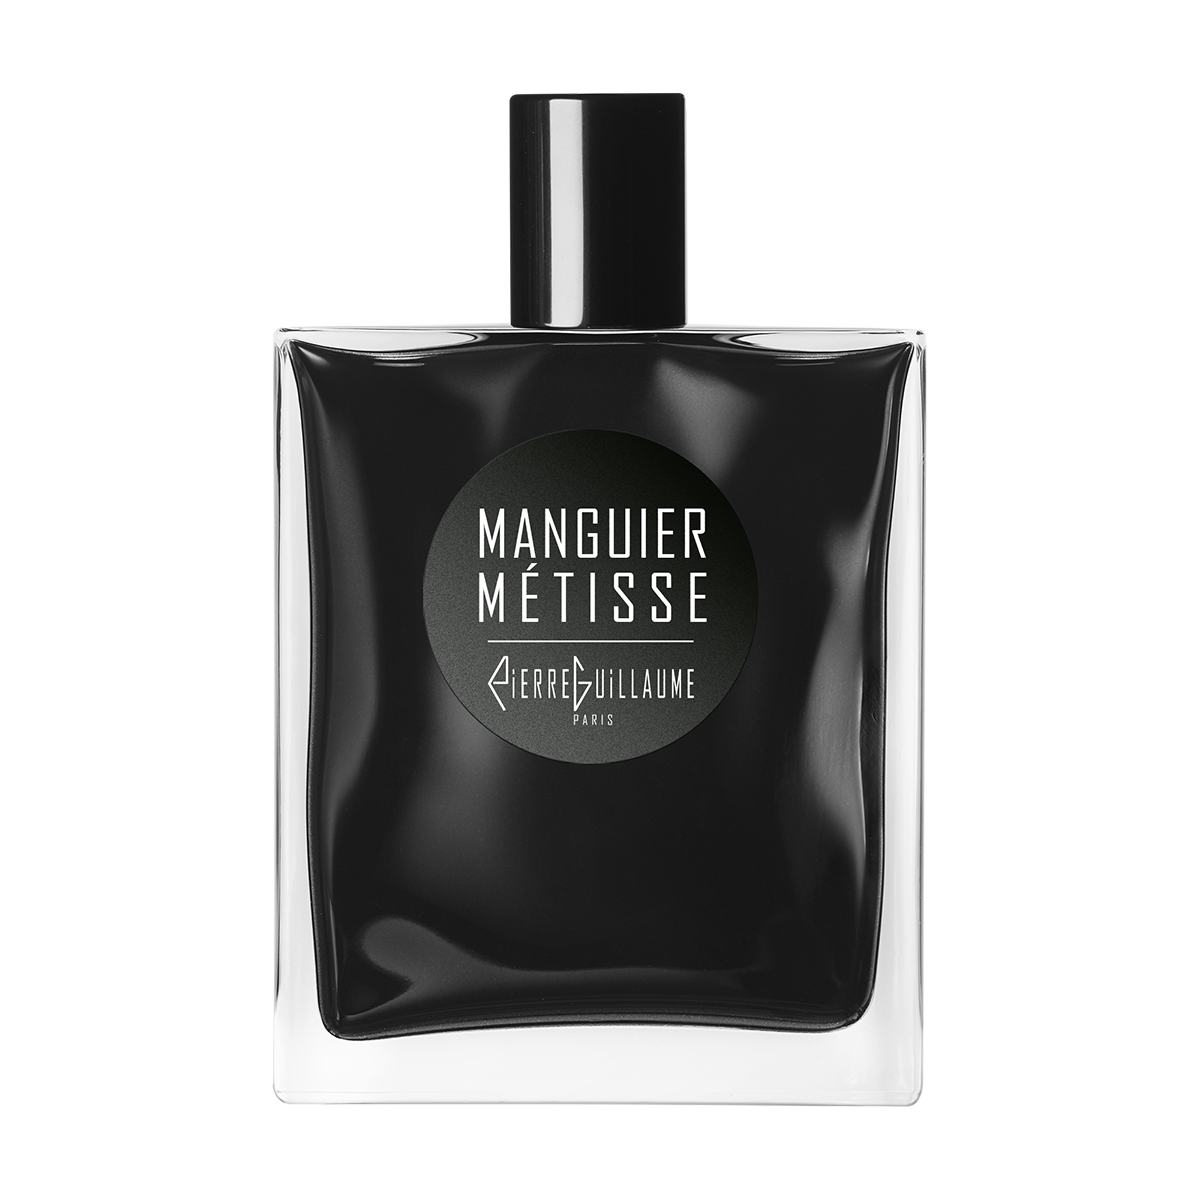 MANGUIER METISSE Eau de Parfum 50ml